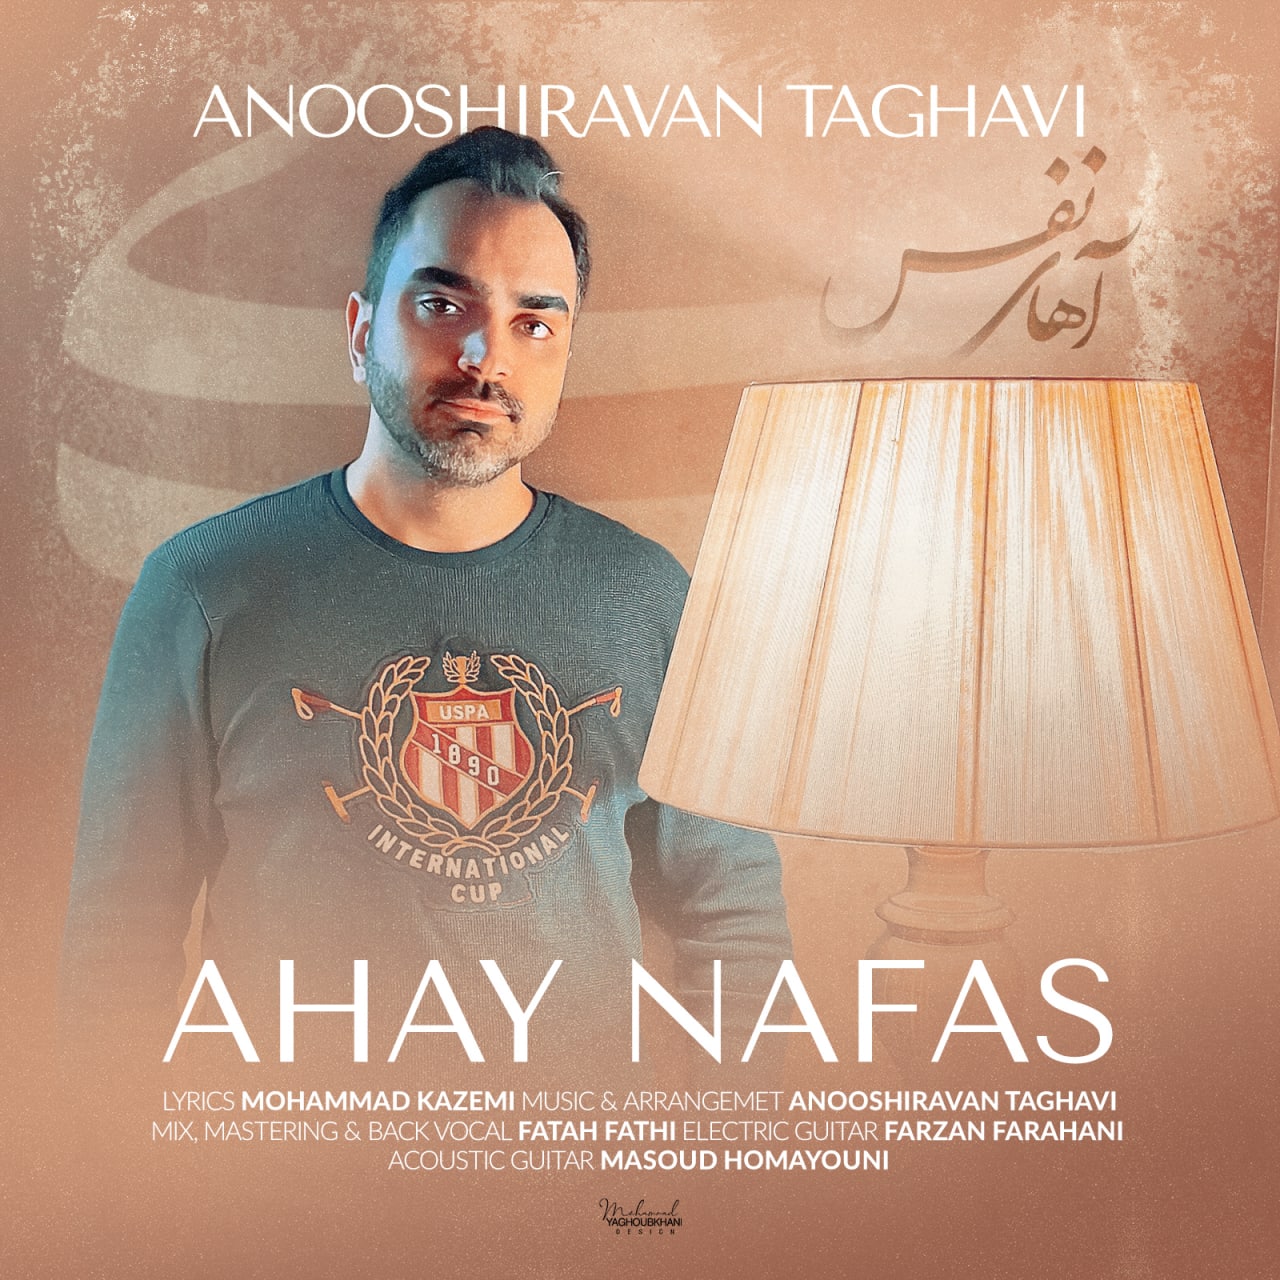 Anoshiravan Taghavi – Ahay Nafas